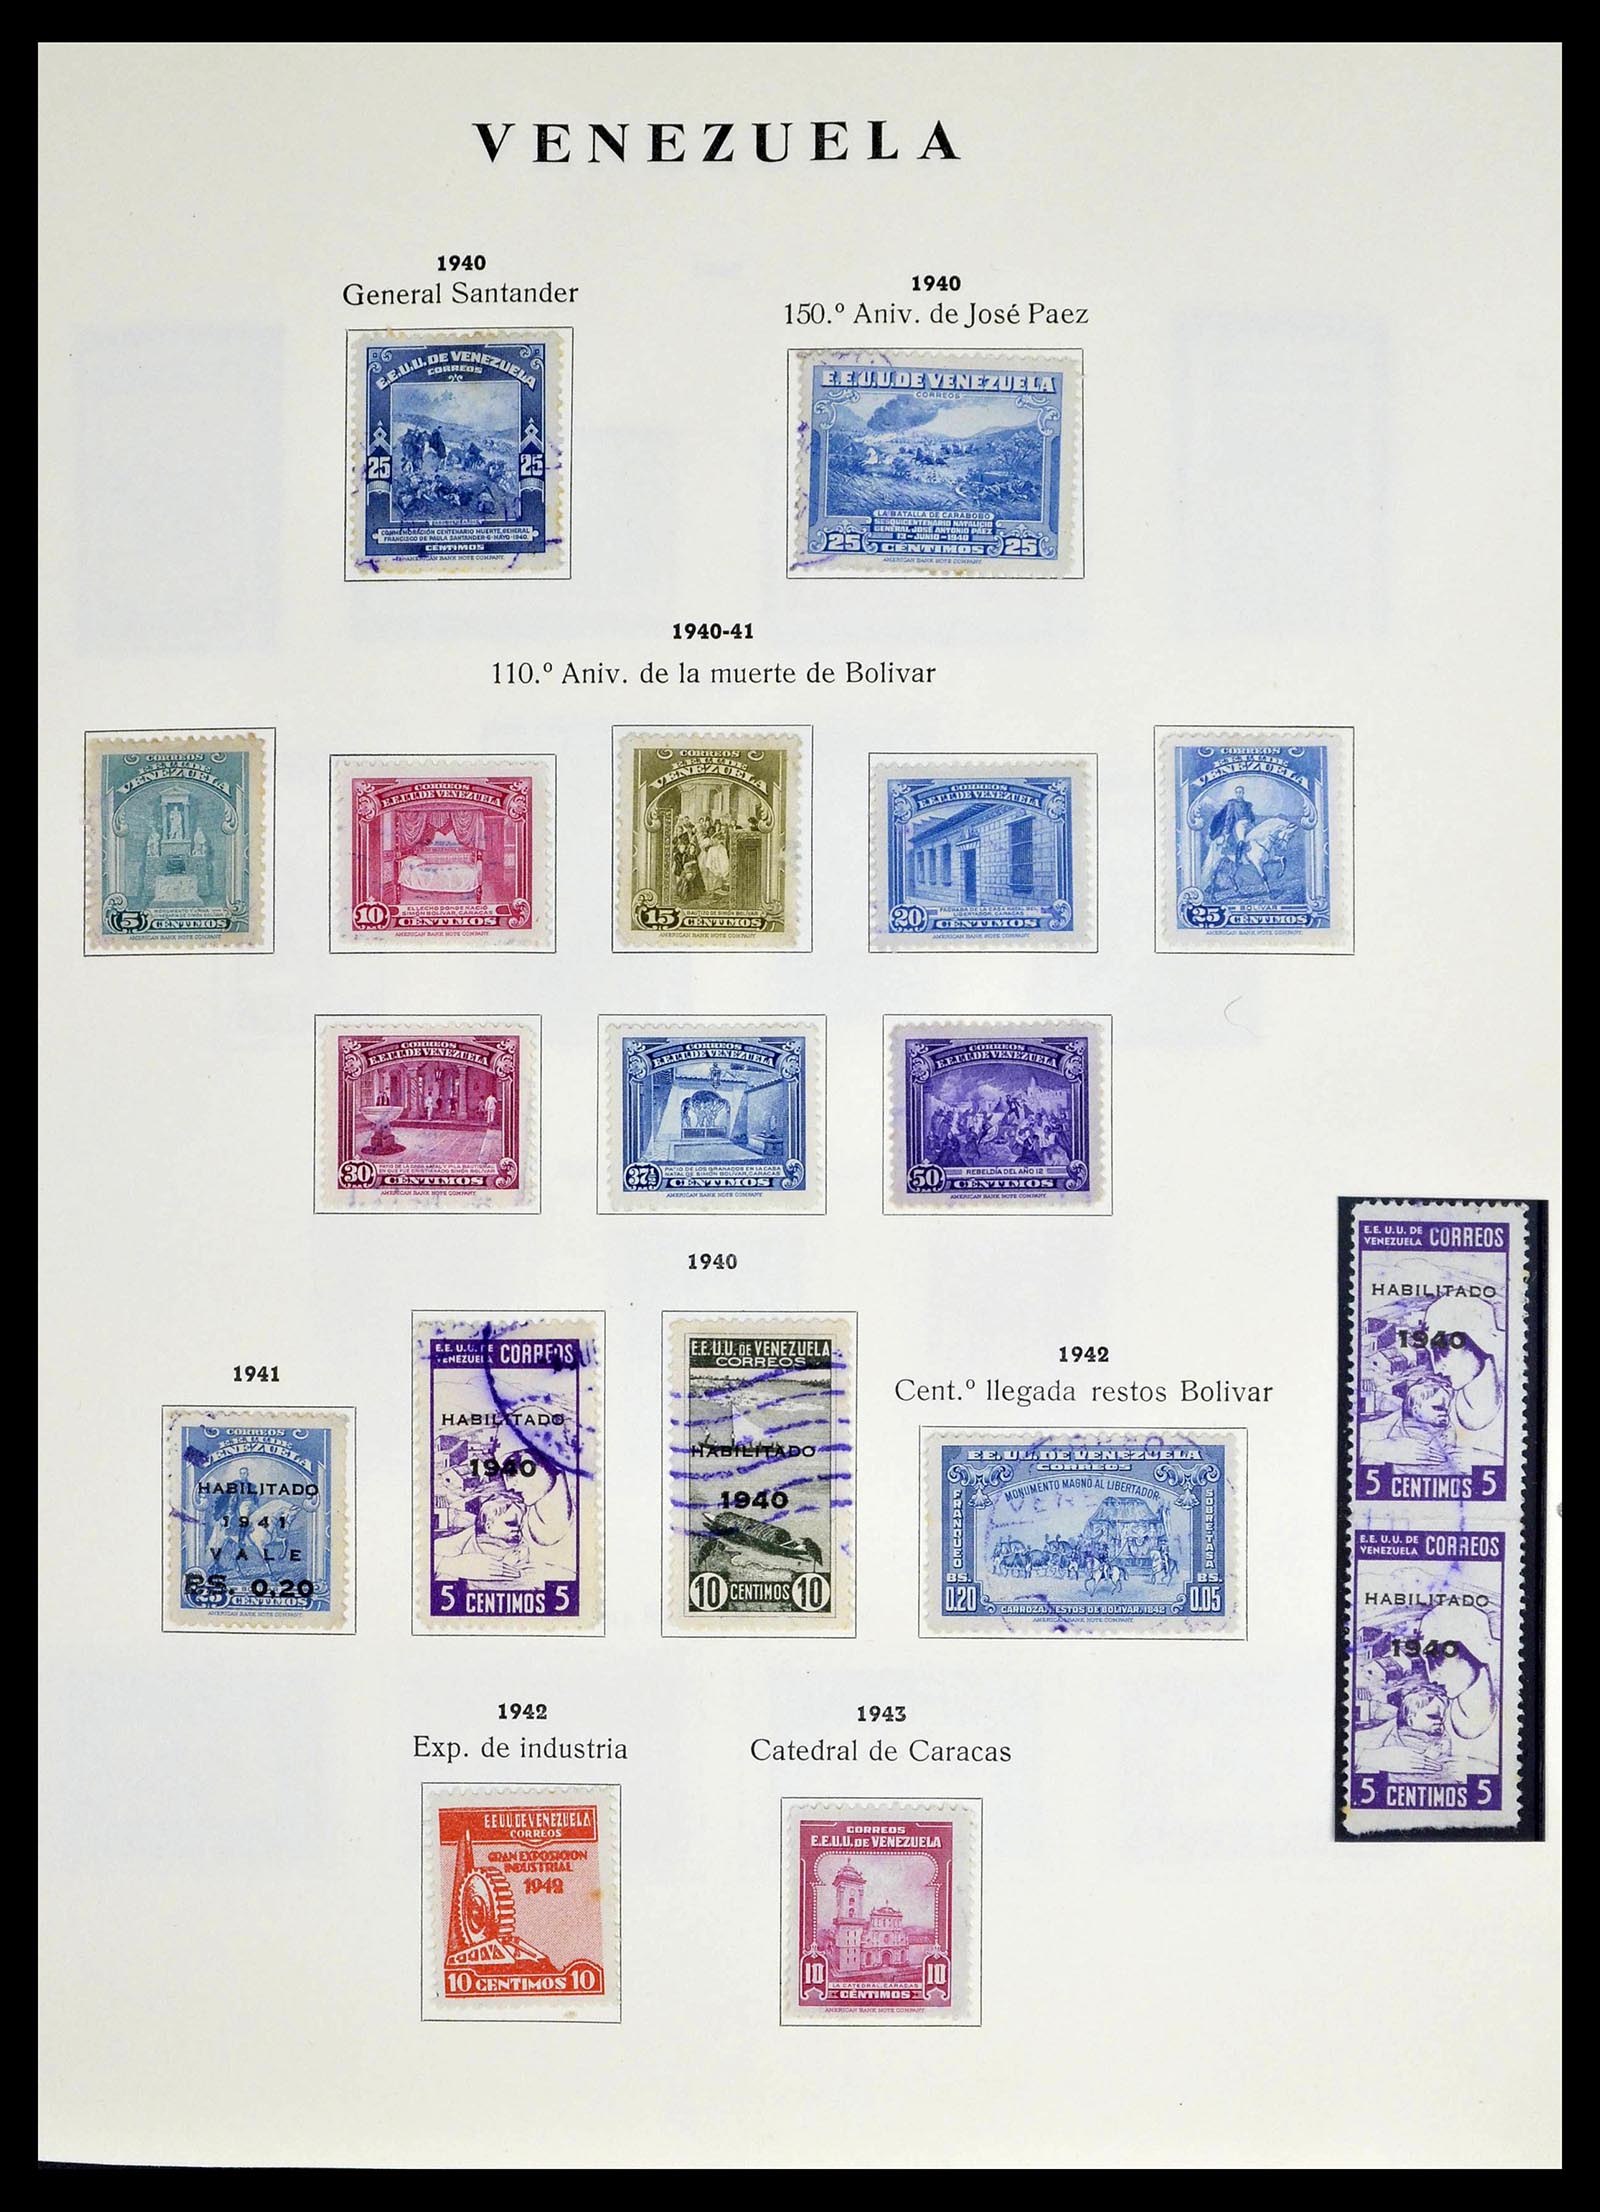 39223 0017 - Stamp collection 39223 Venezuela 1859-1984.